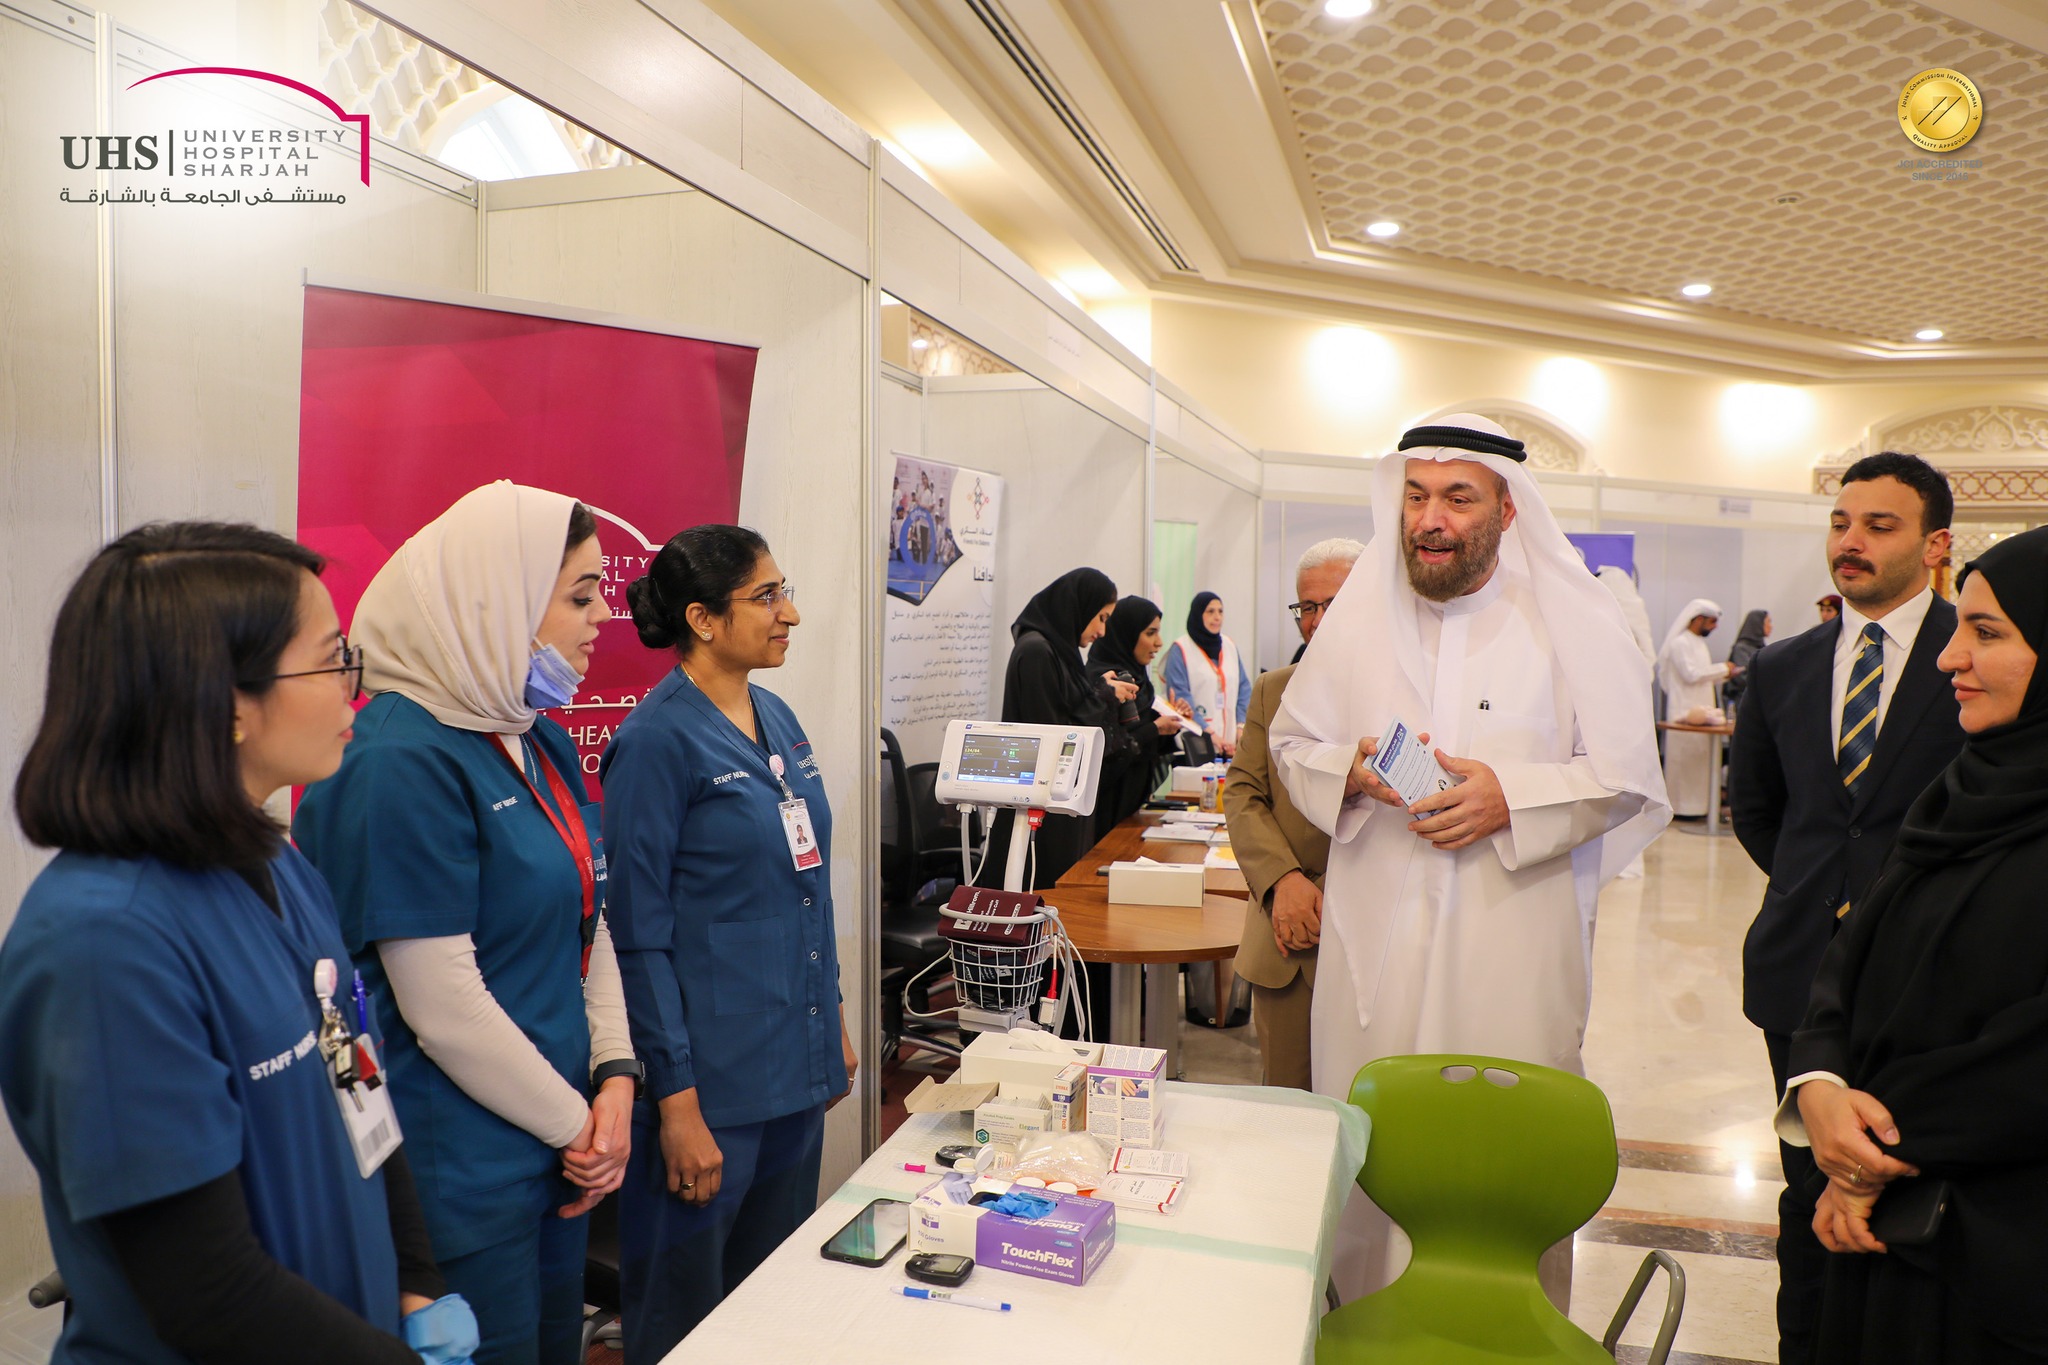 "Health is Happiness Exhibition" at Al Qasimia University